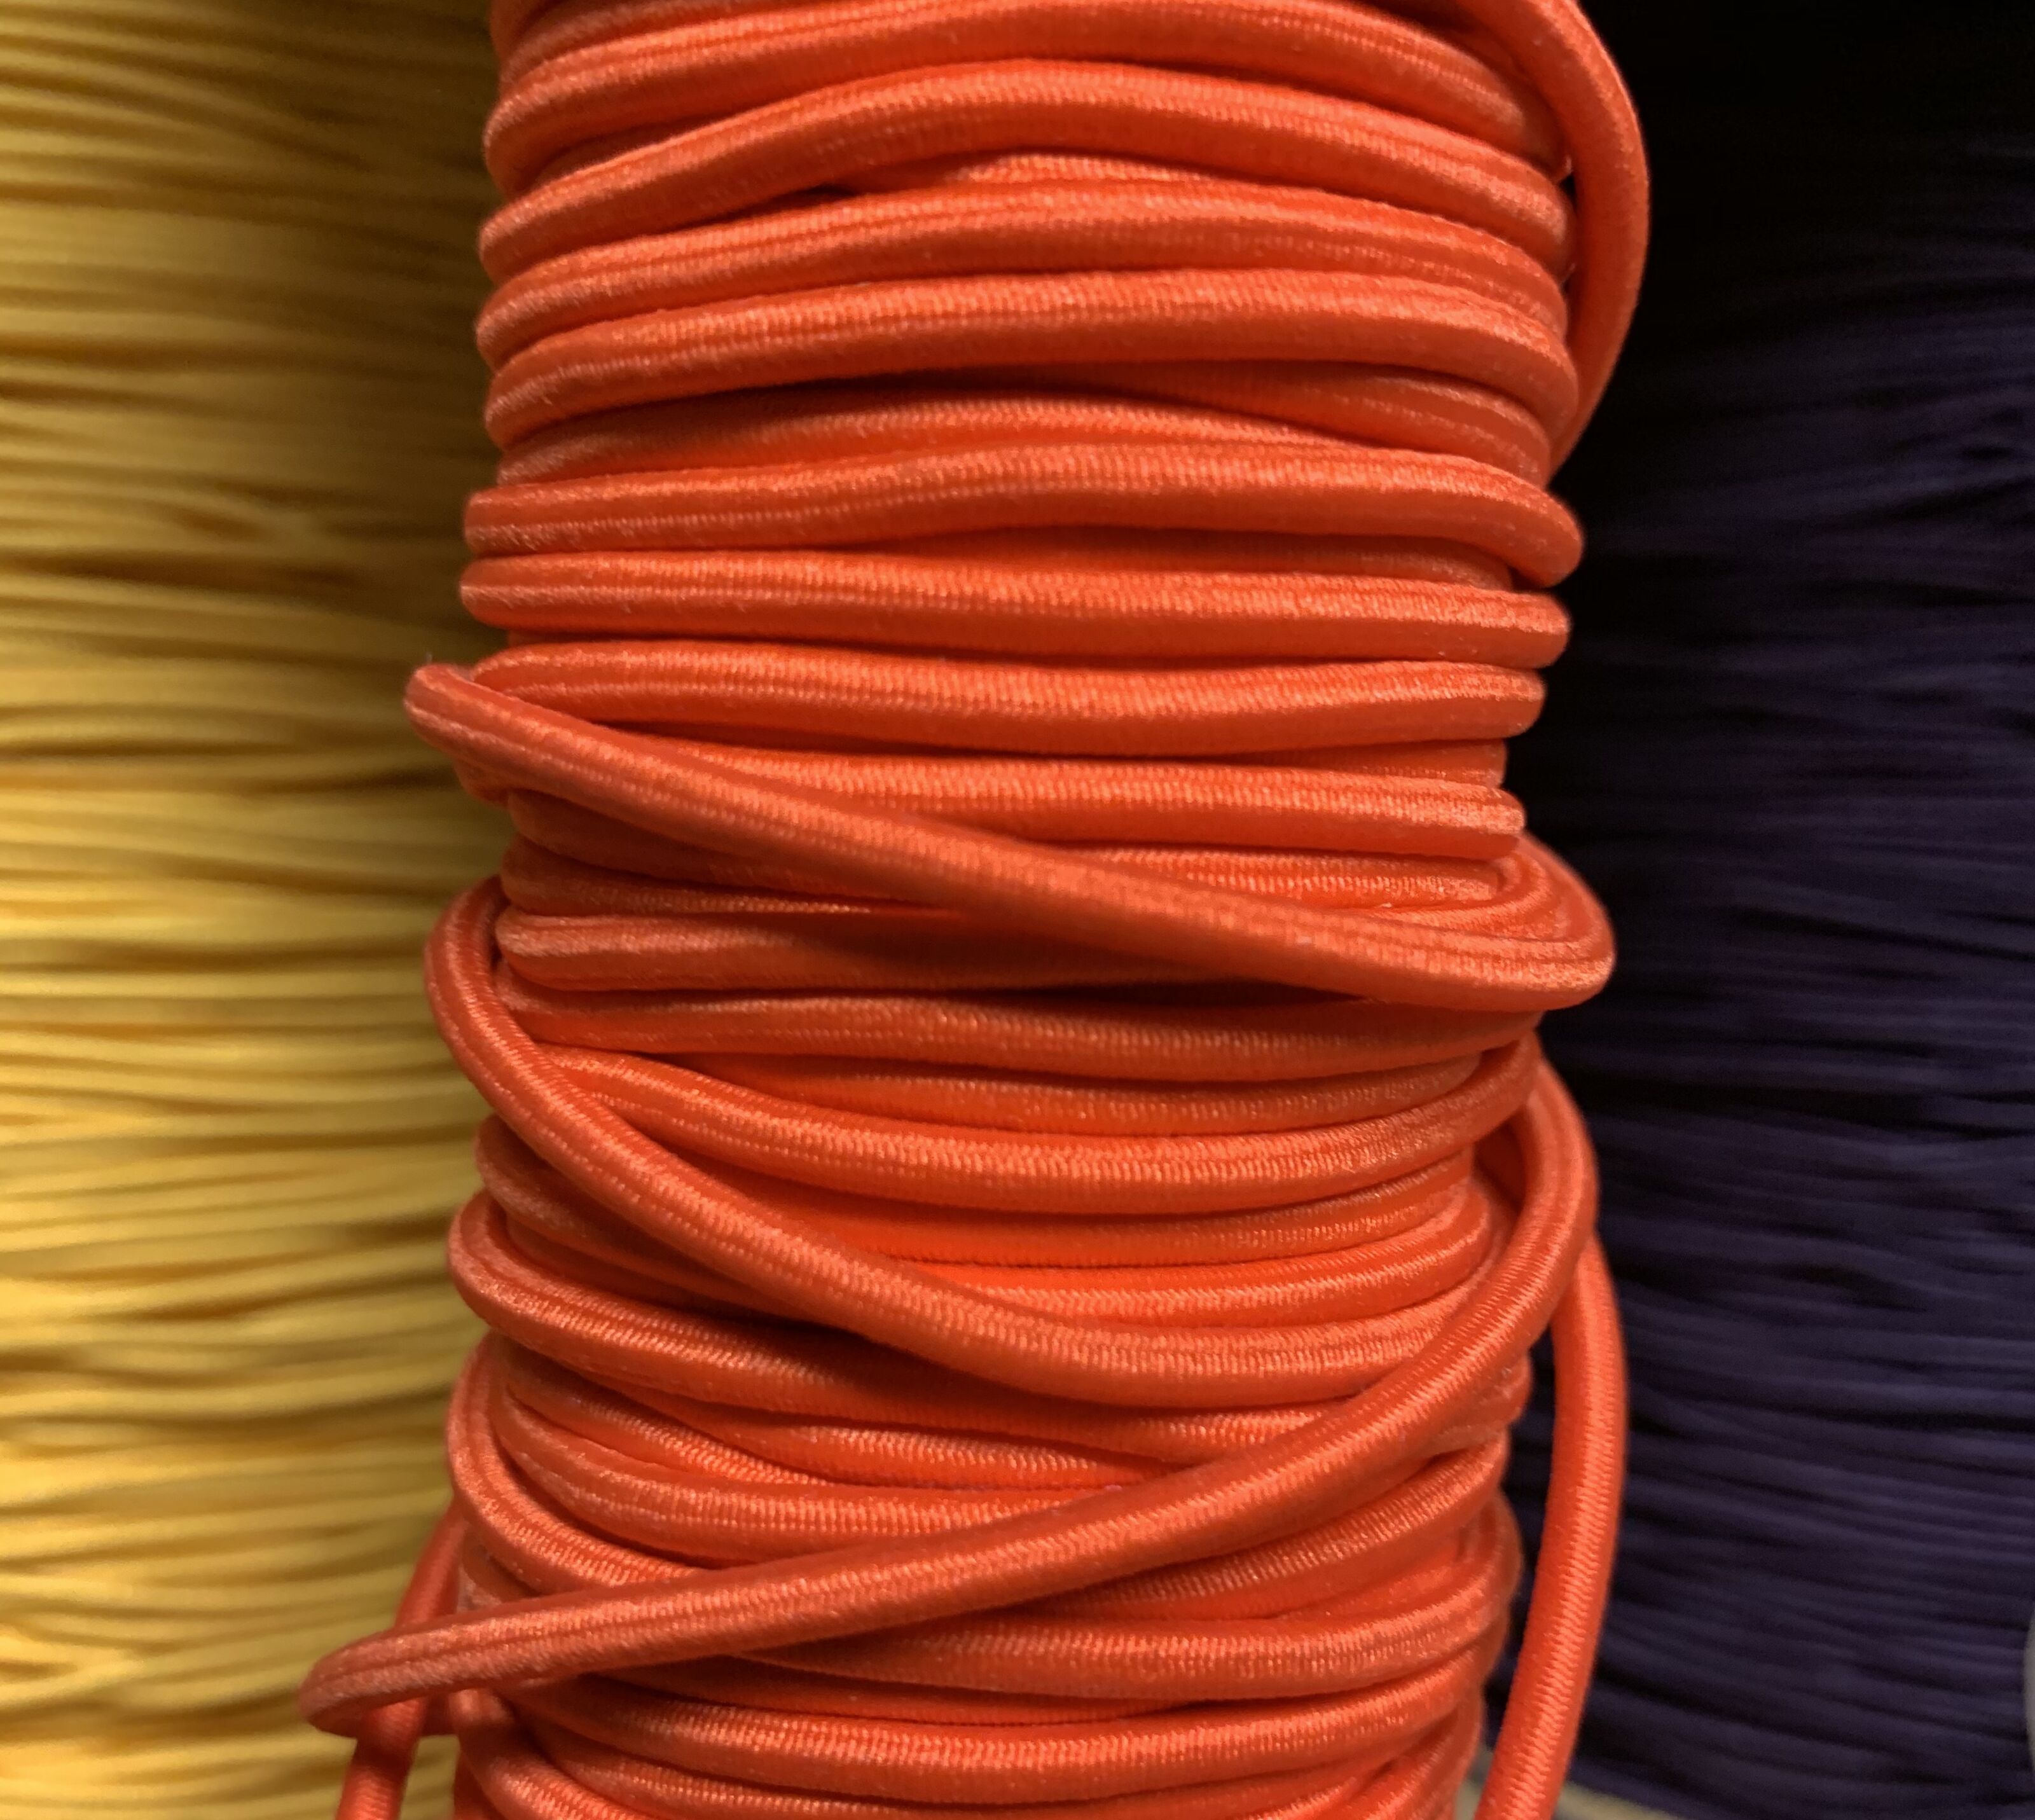 https://www.croftmill.co.uk/images/pictures/2019/shop/haberdashery/orange-elastic-cord-drawstring-2-5mm-(gallery).jpg?v=272464b3&mode=h